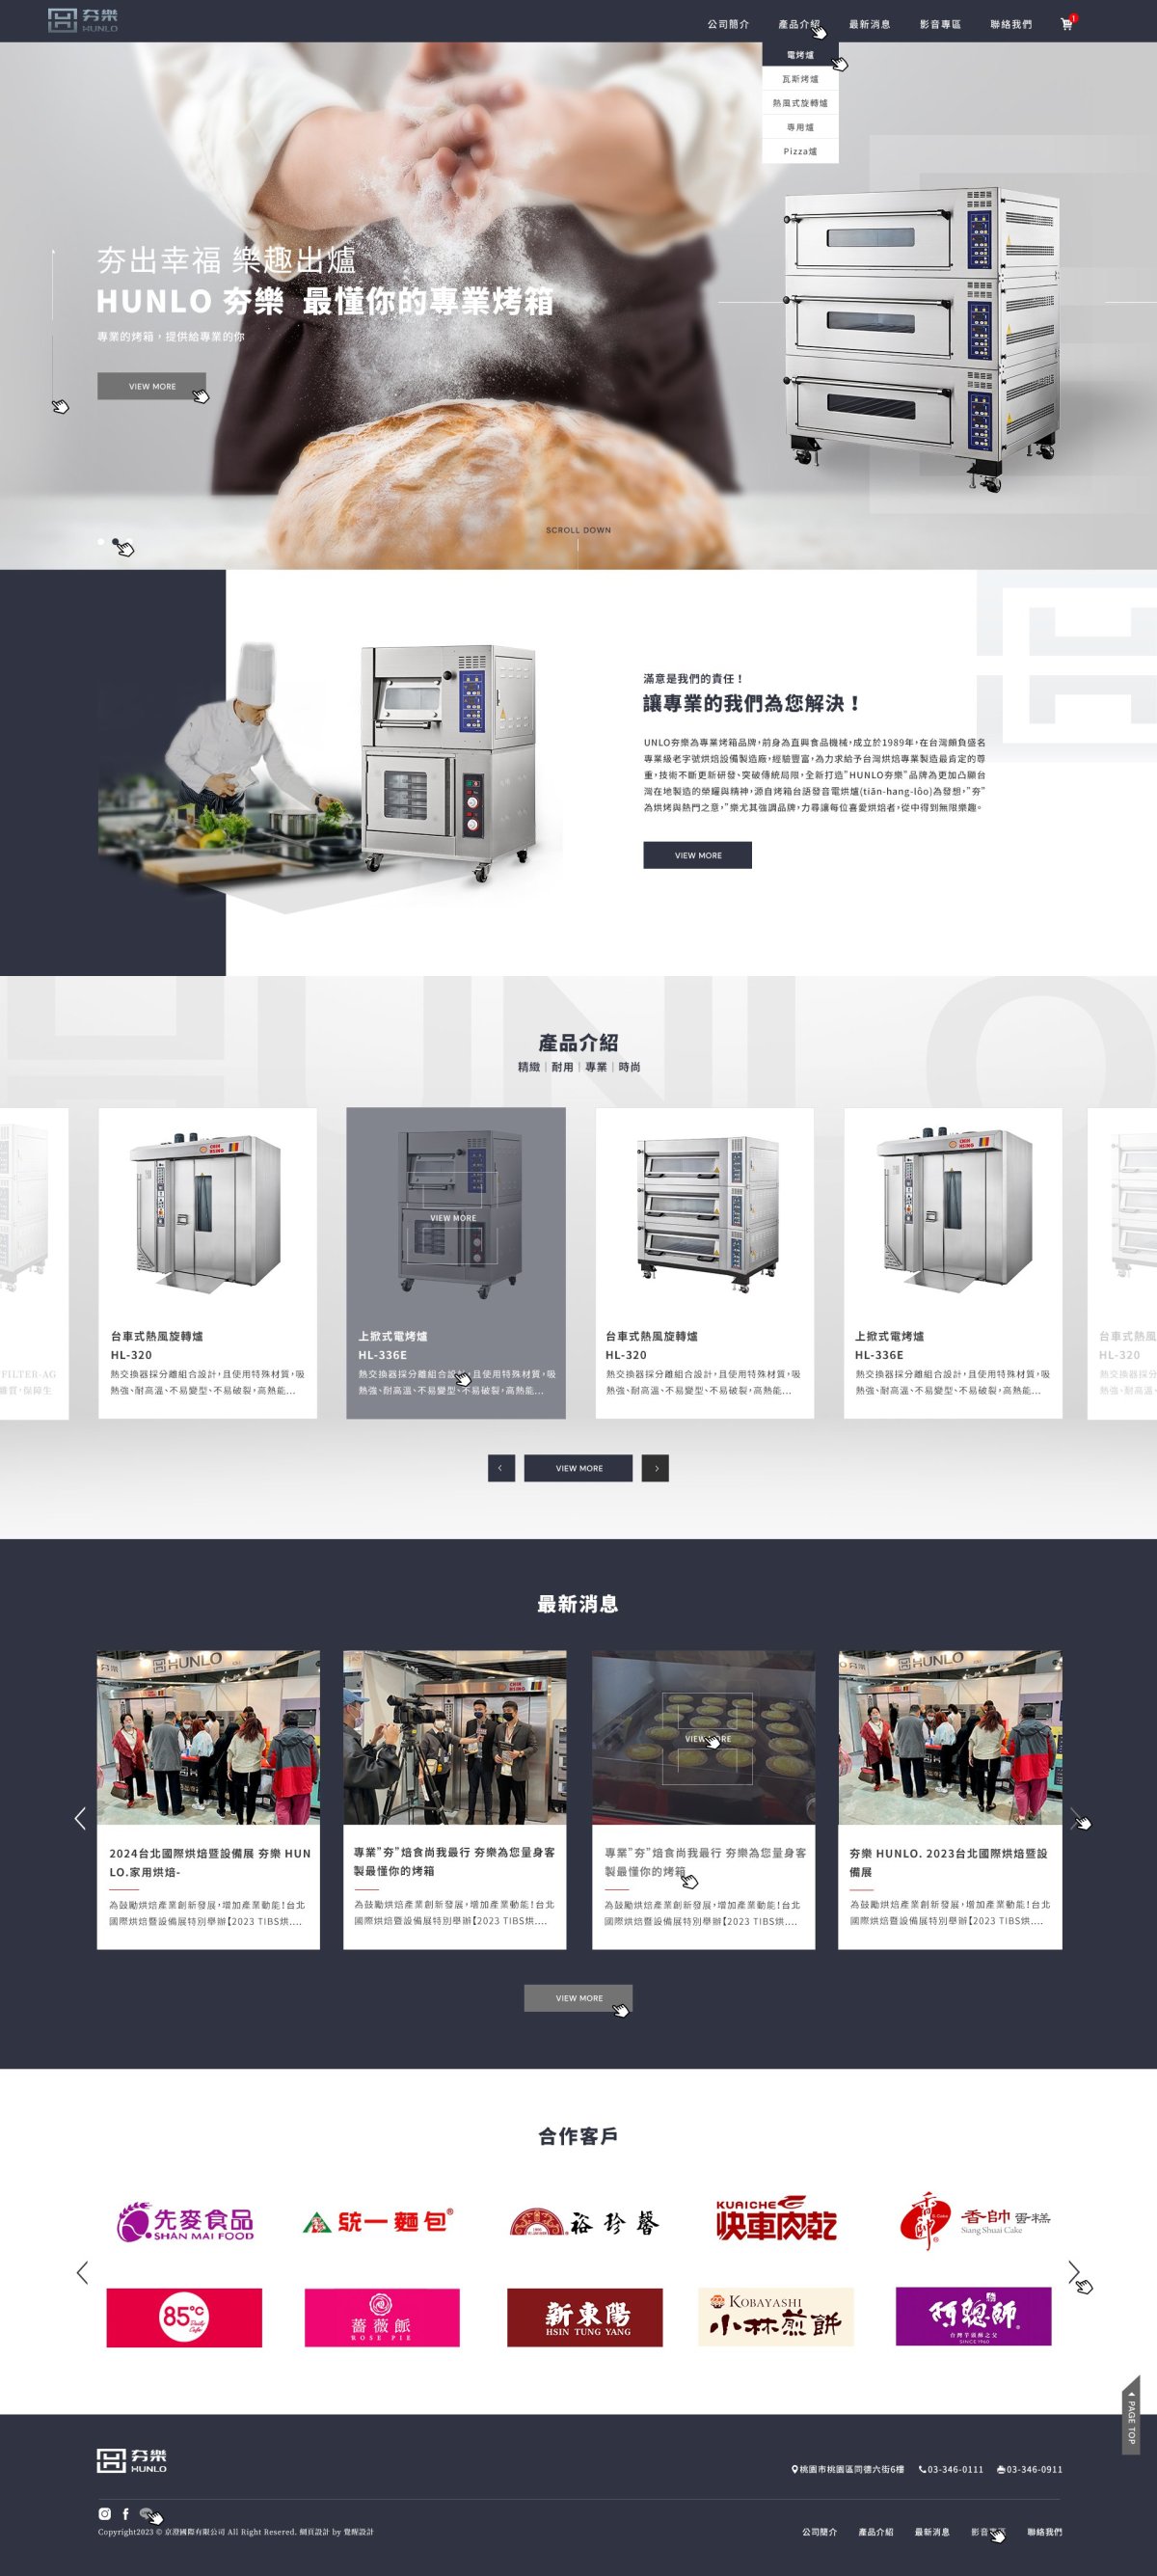 HUNLO夯樂烤箱-首頁網站客製化設計-覺醒網頁計服務